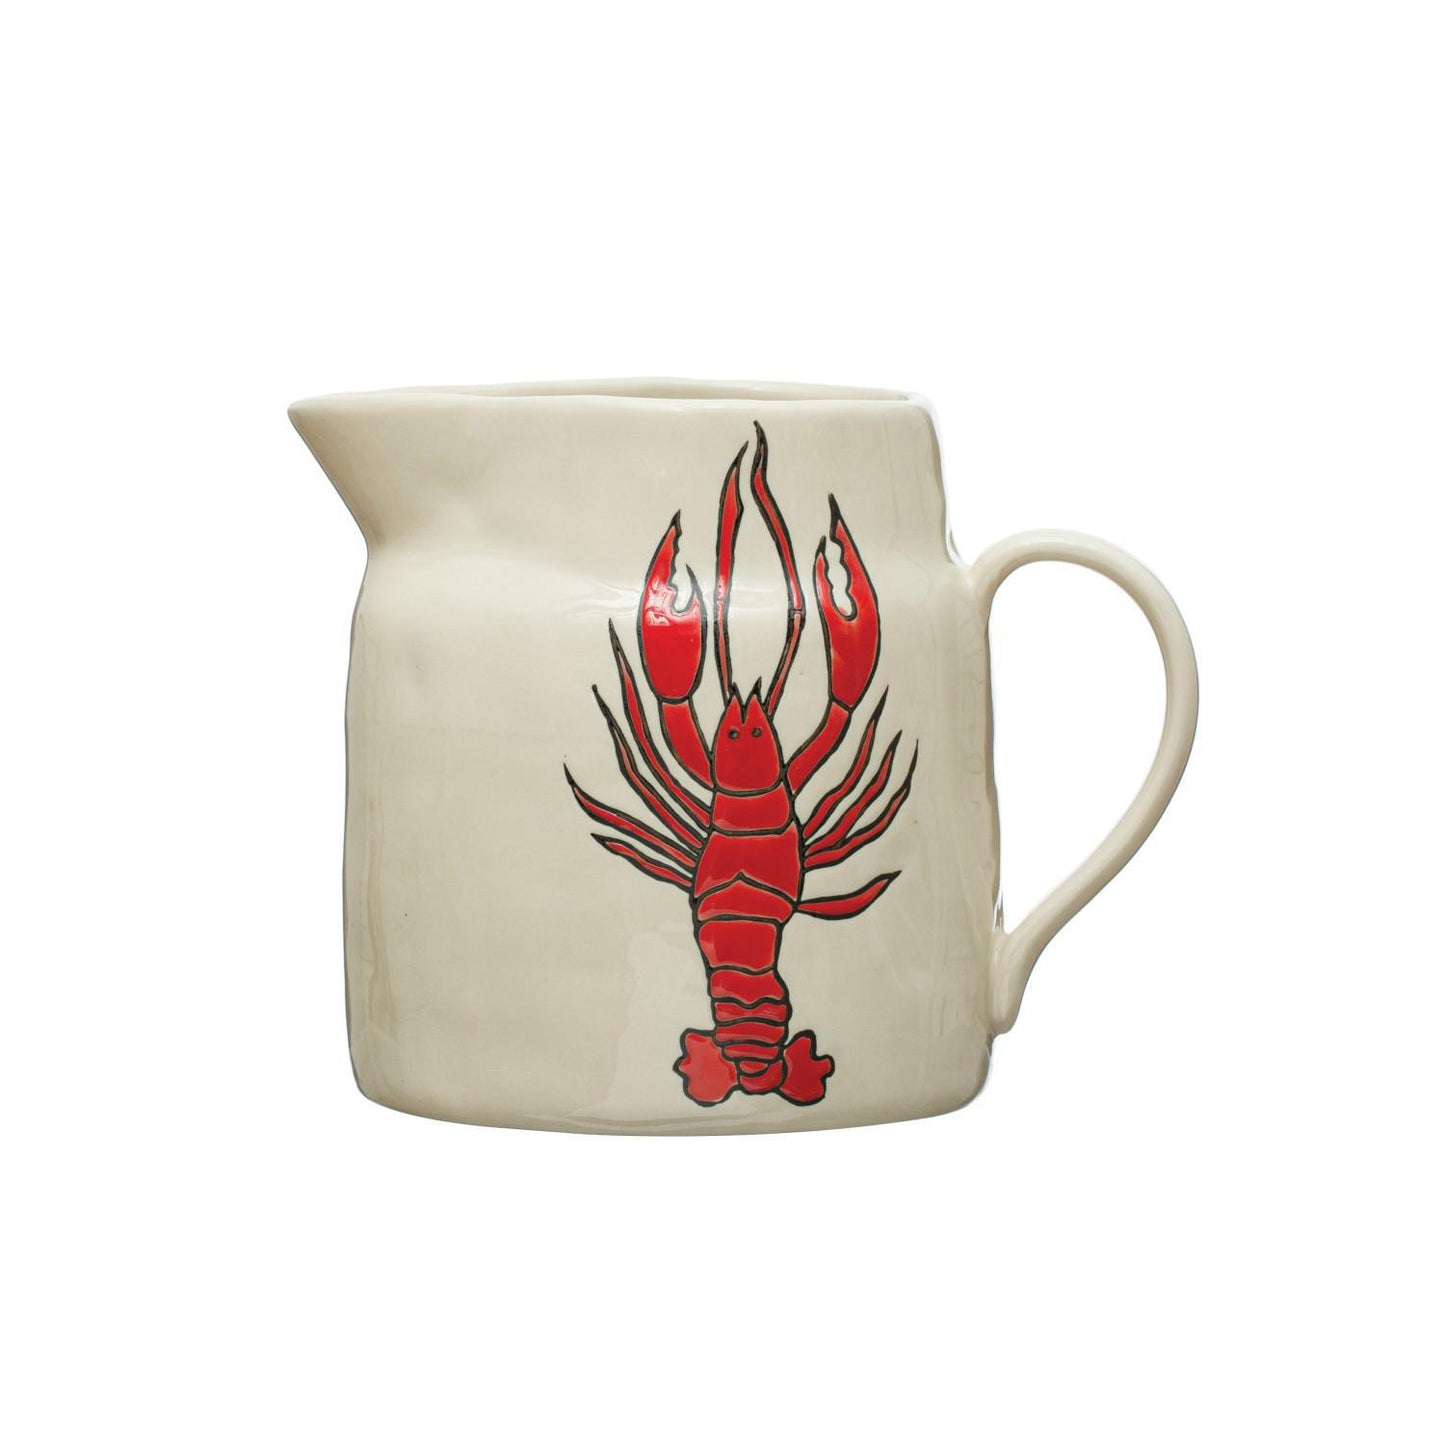 56 oz. Stoneware Pitcher w/ Wax Relief Lobster, Red & White